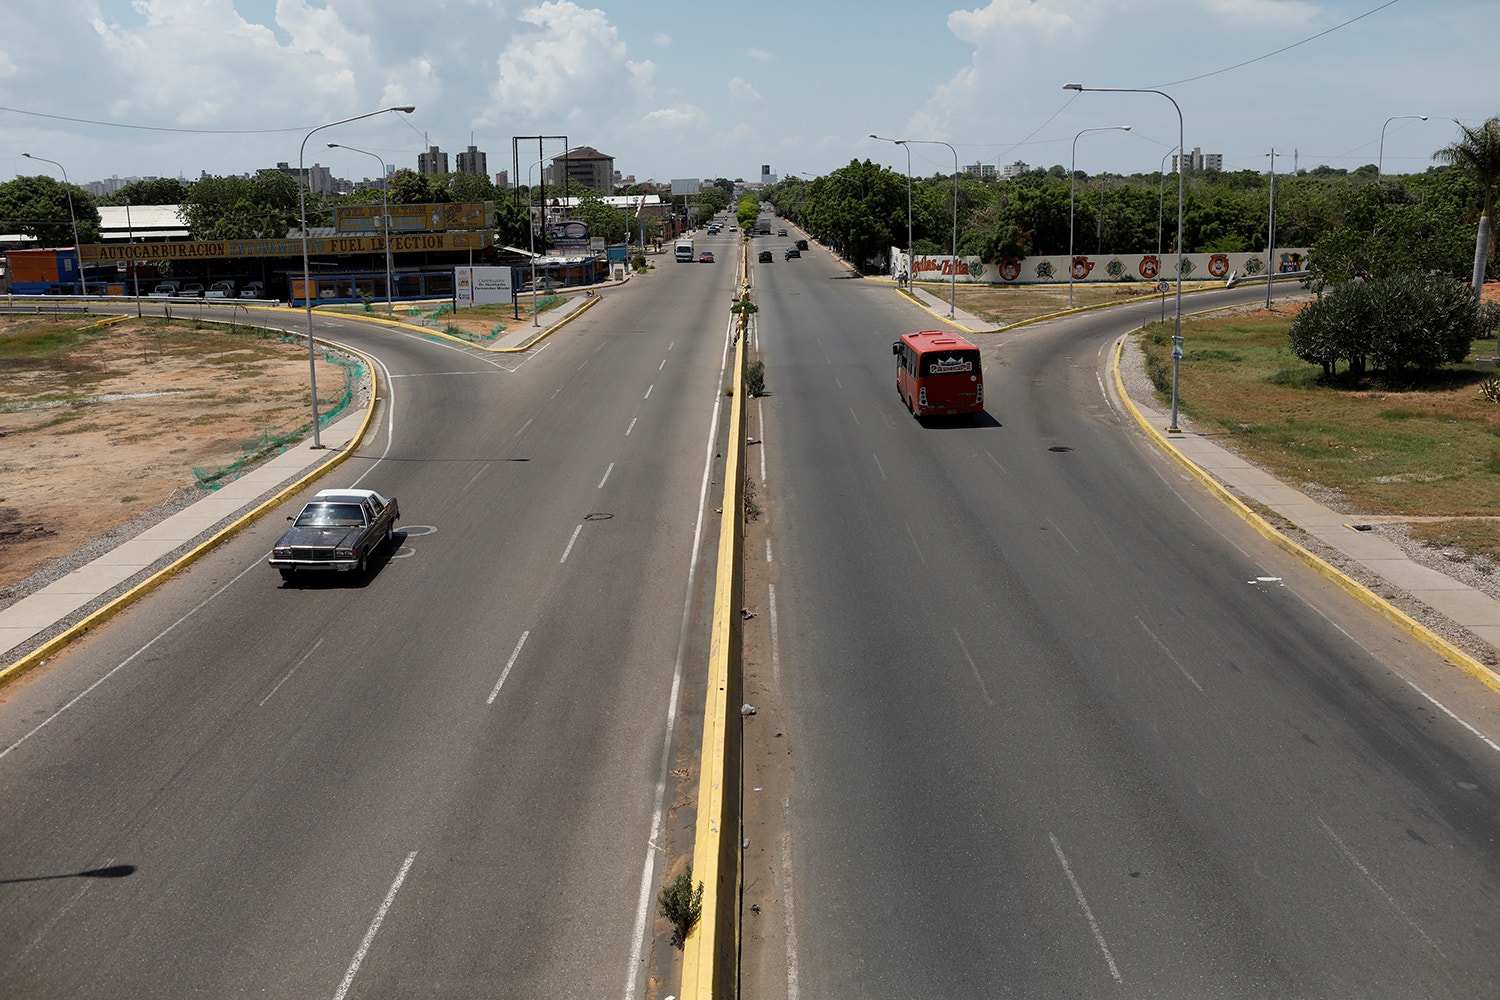  Estrada principal em hora de ponta /Foto: Marco Bello - Reuters 